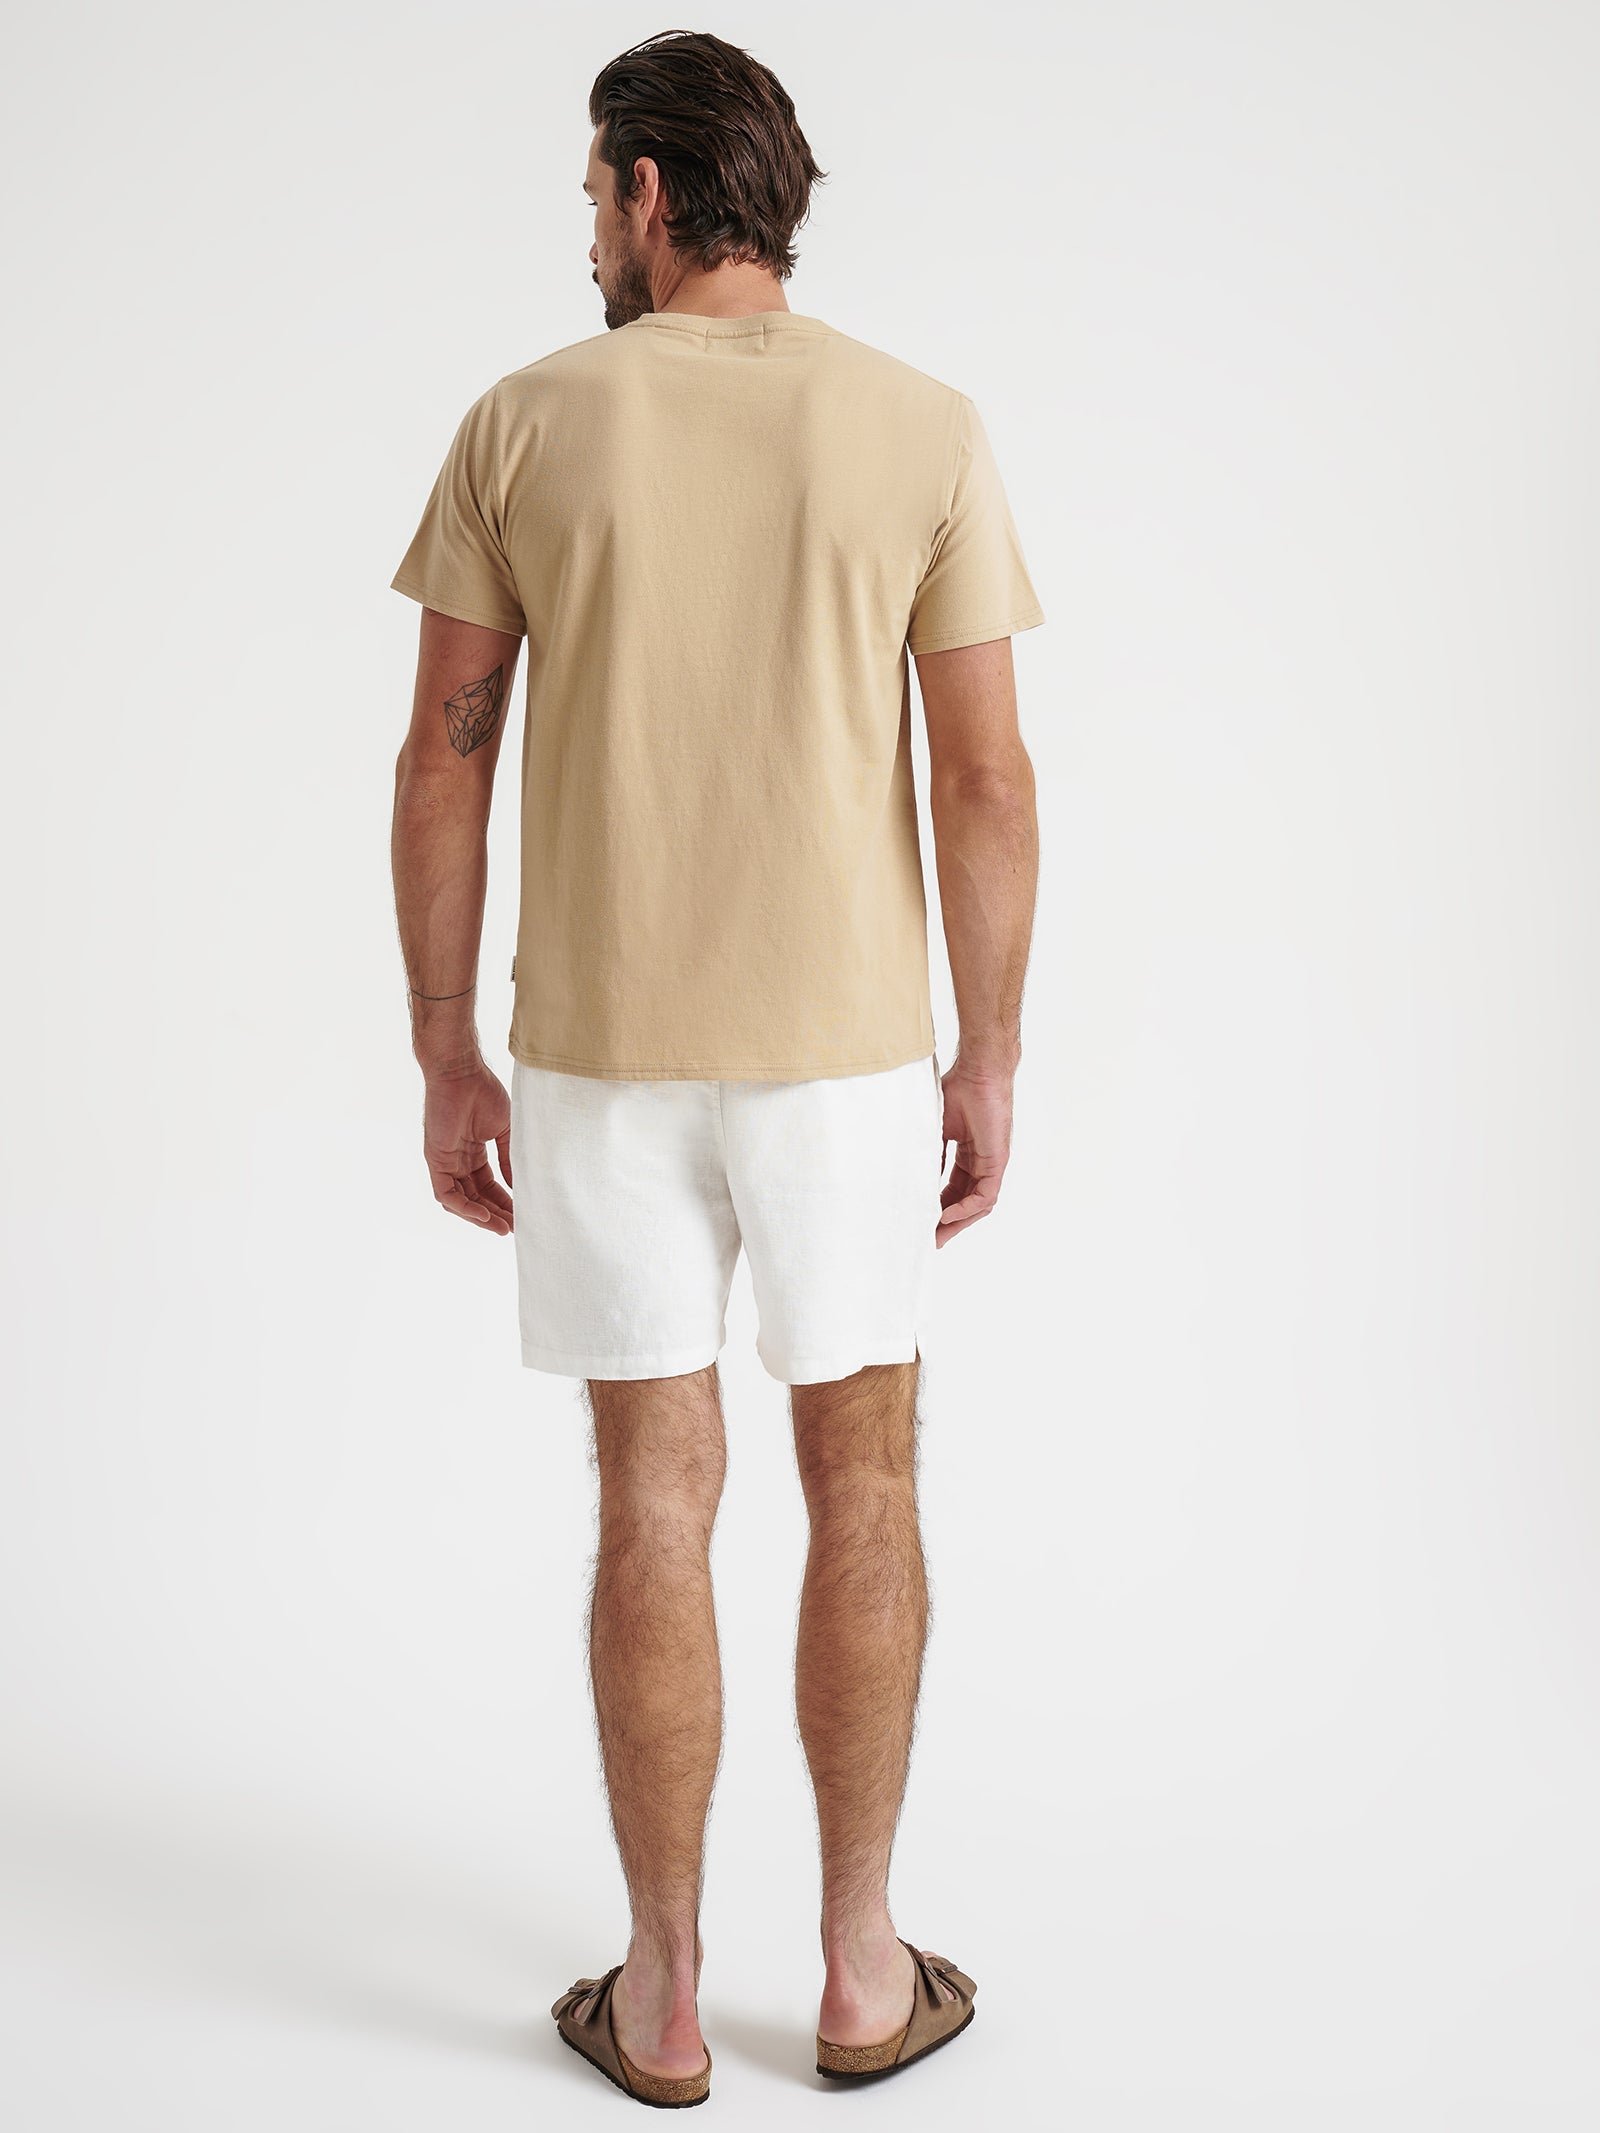 Nero Linen Shorts in White